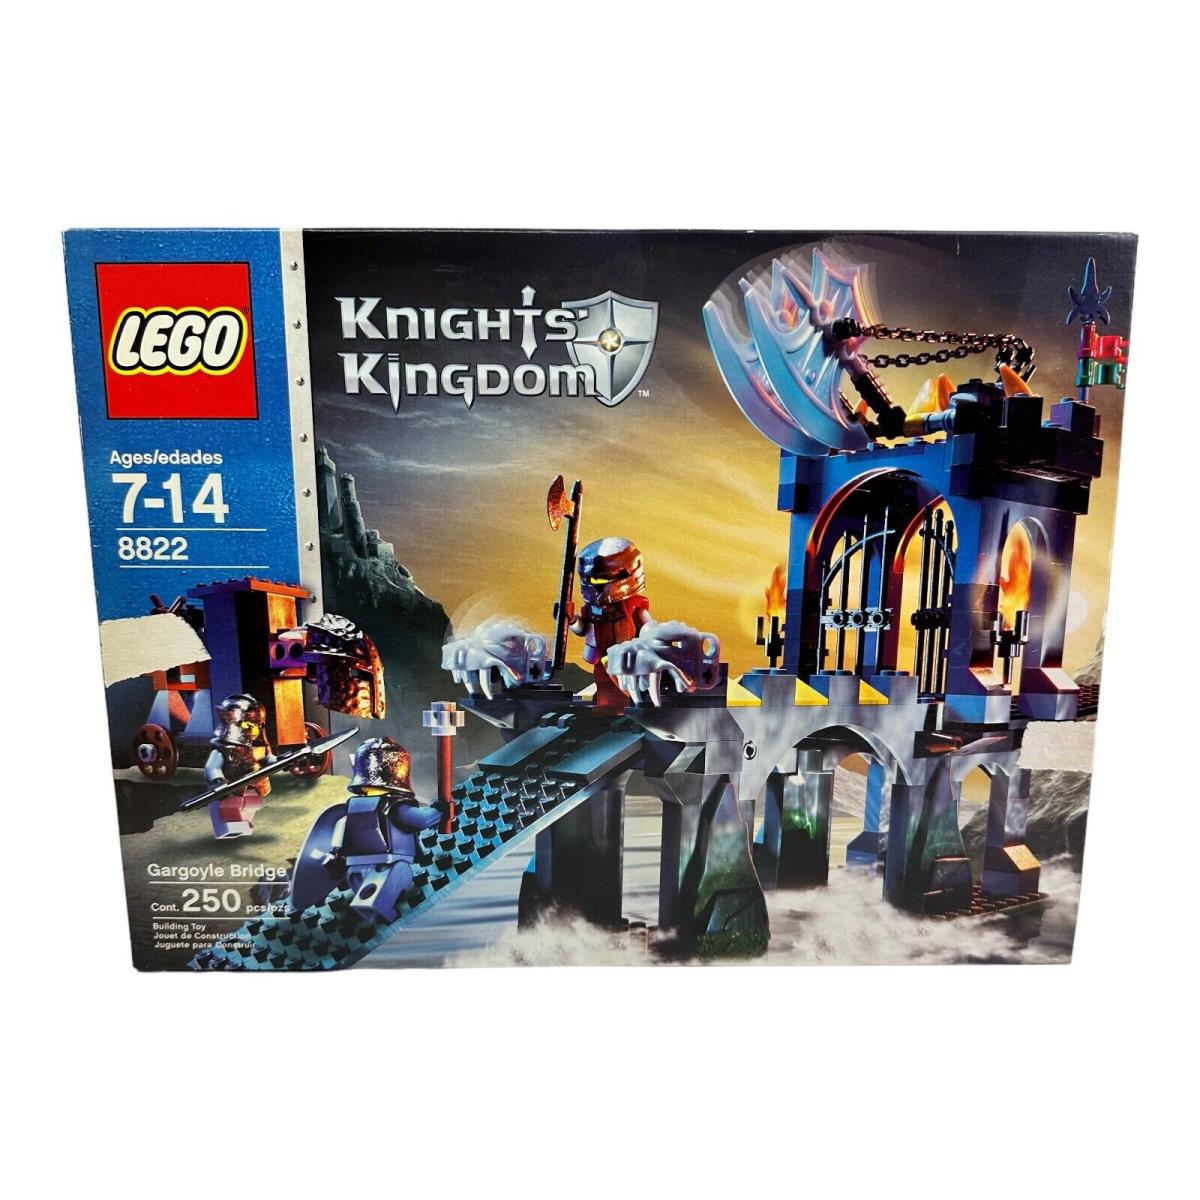 Lego 8822 Castle Knights Kingdom Gargoyle Bridge Retired Set - Red